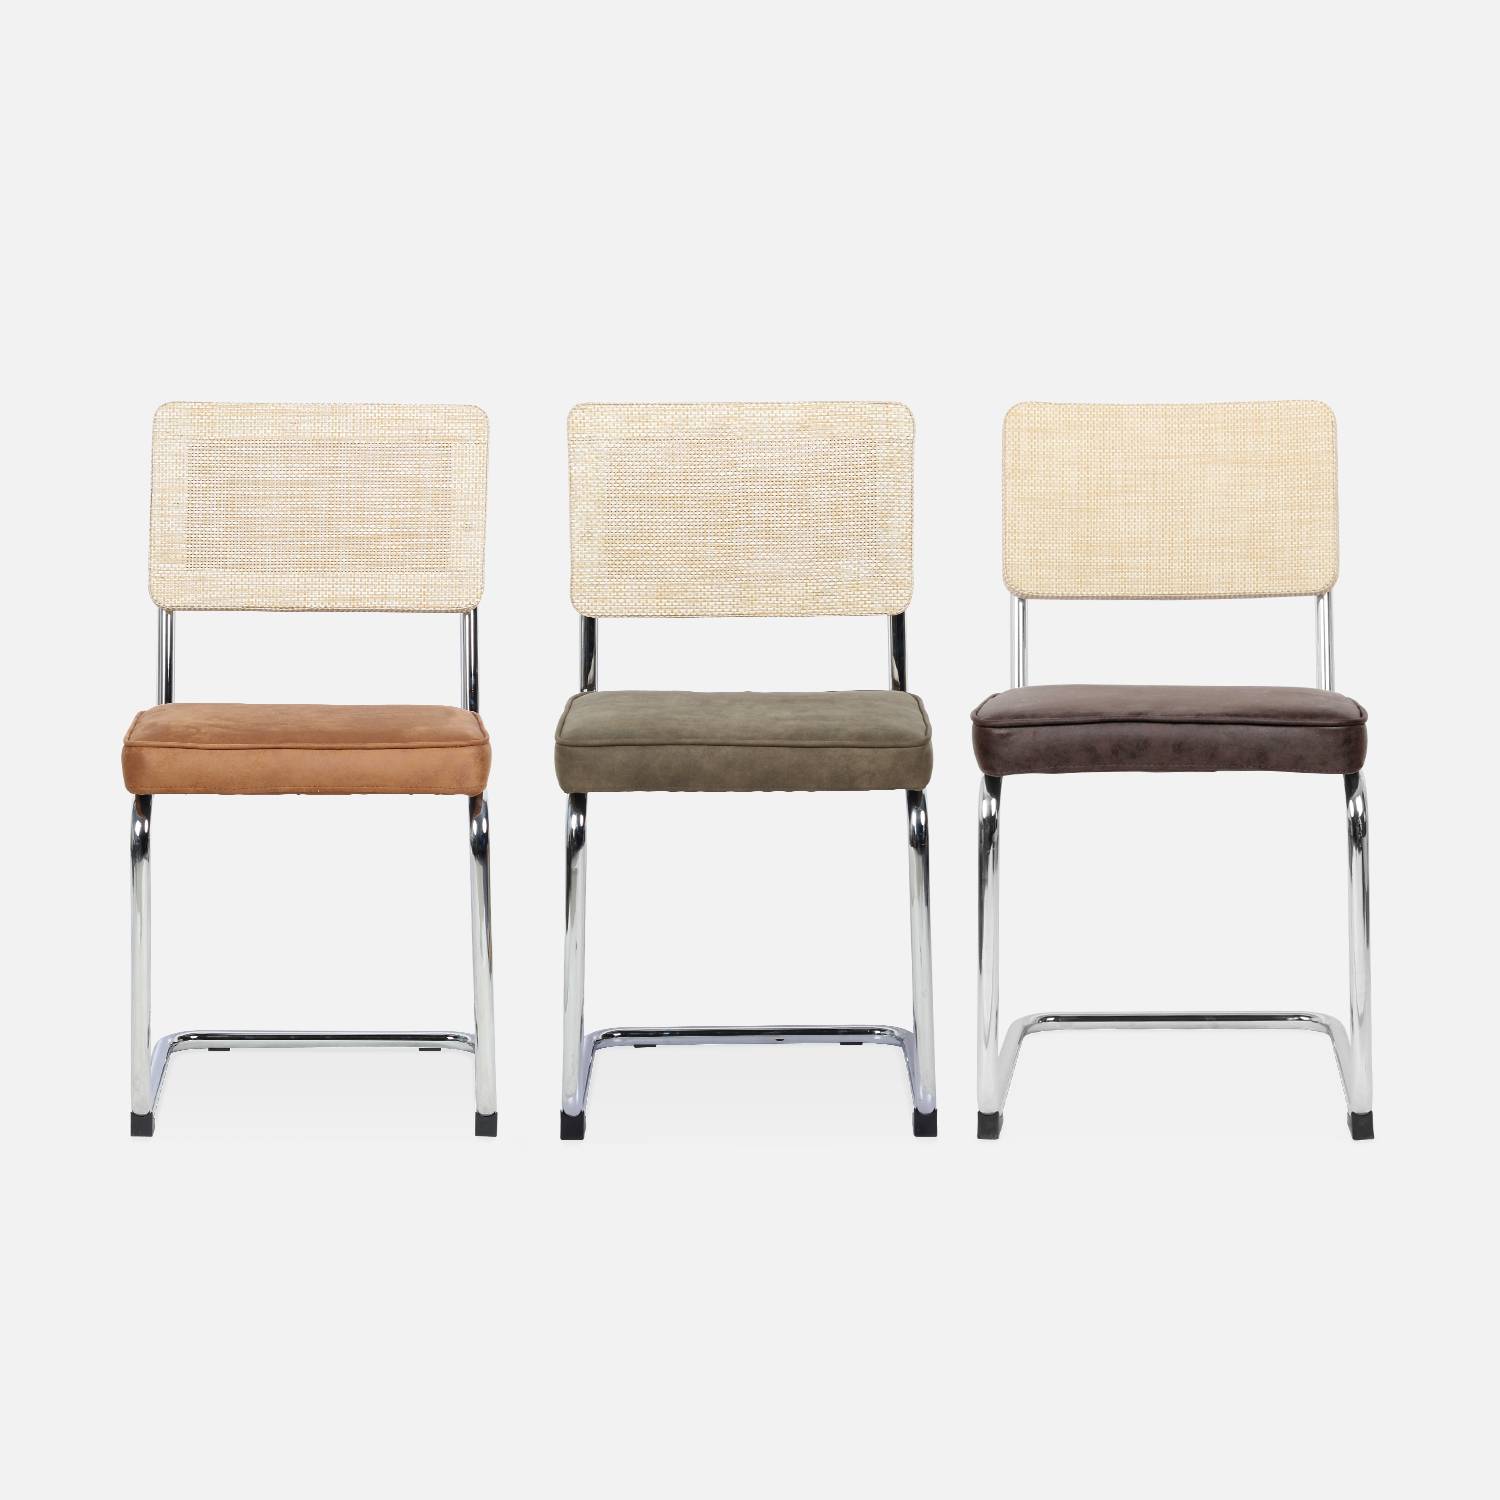 2 sillas cantilever - Maja - tela marrón claro y resina efecto ratán, 46 x 54,5 x 84,5cm  ,sweeek,Photo7